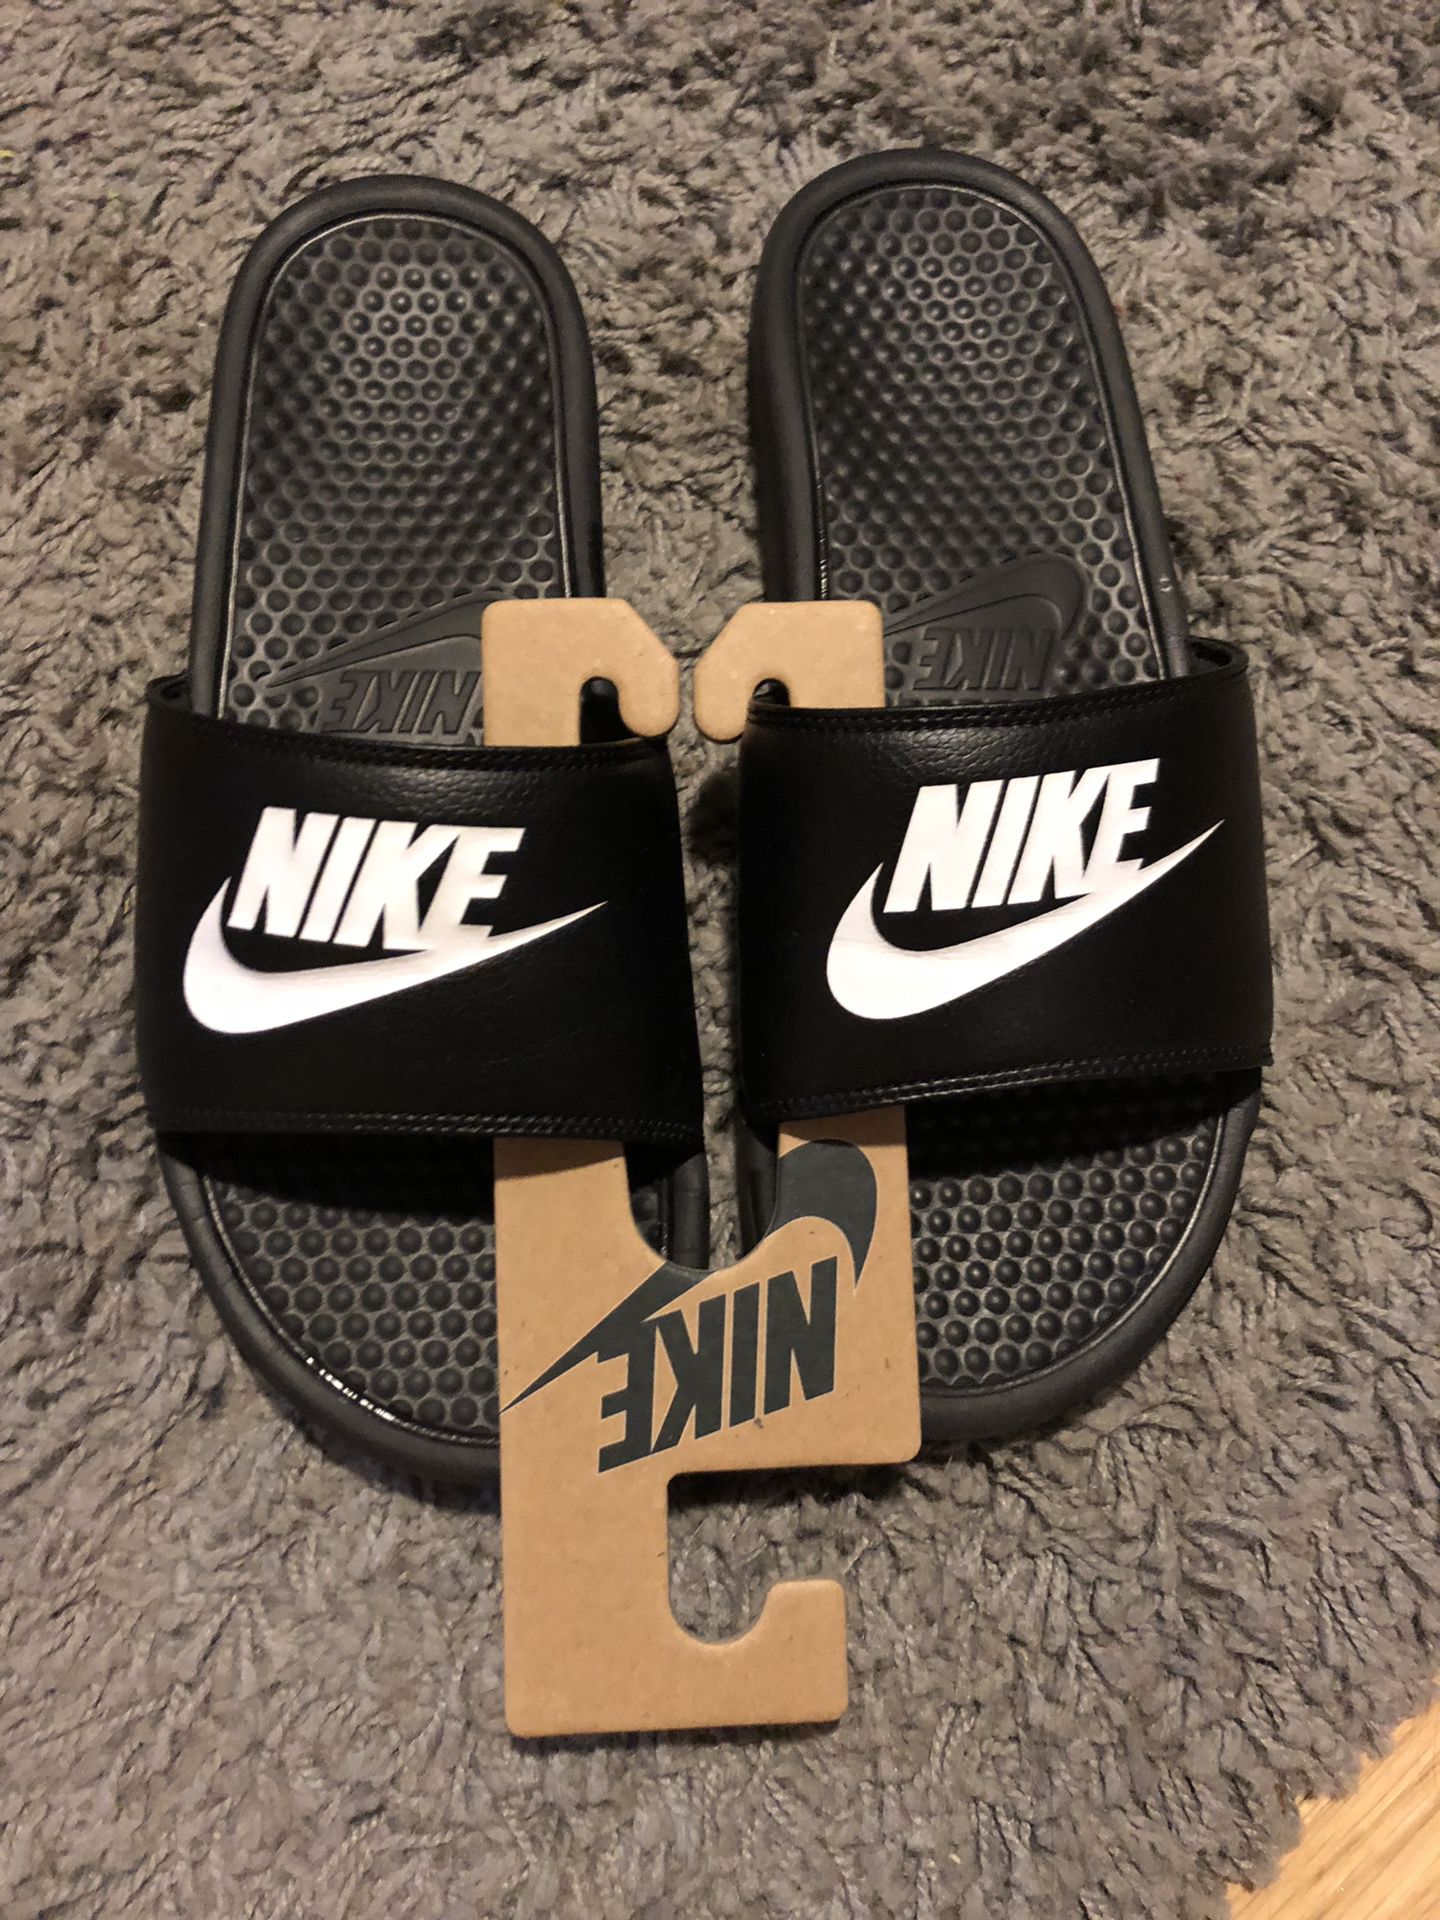 Men’s footwear - Nike Sandals / Snow shoes